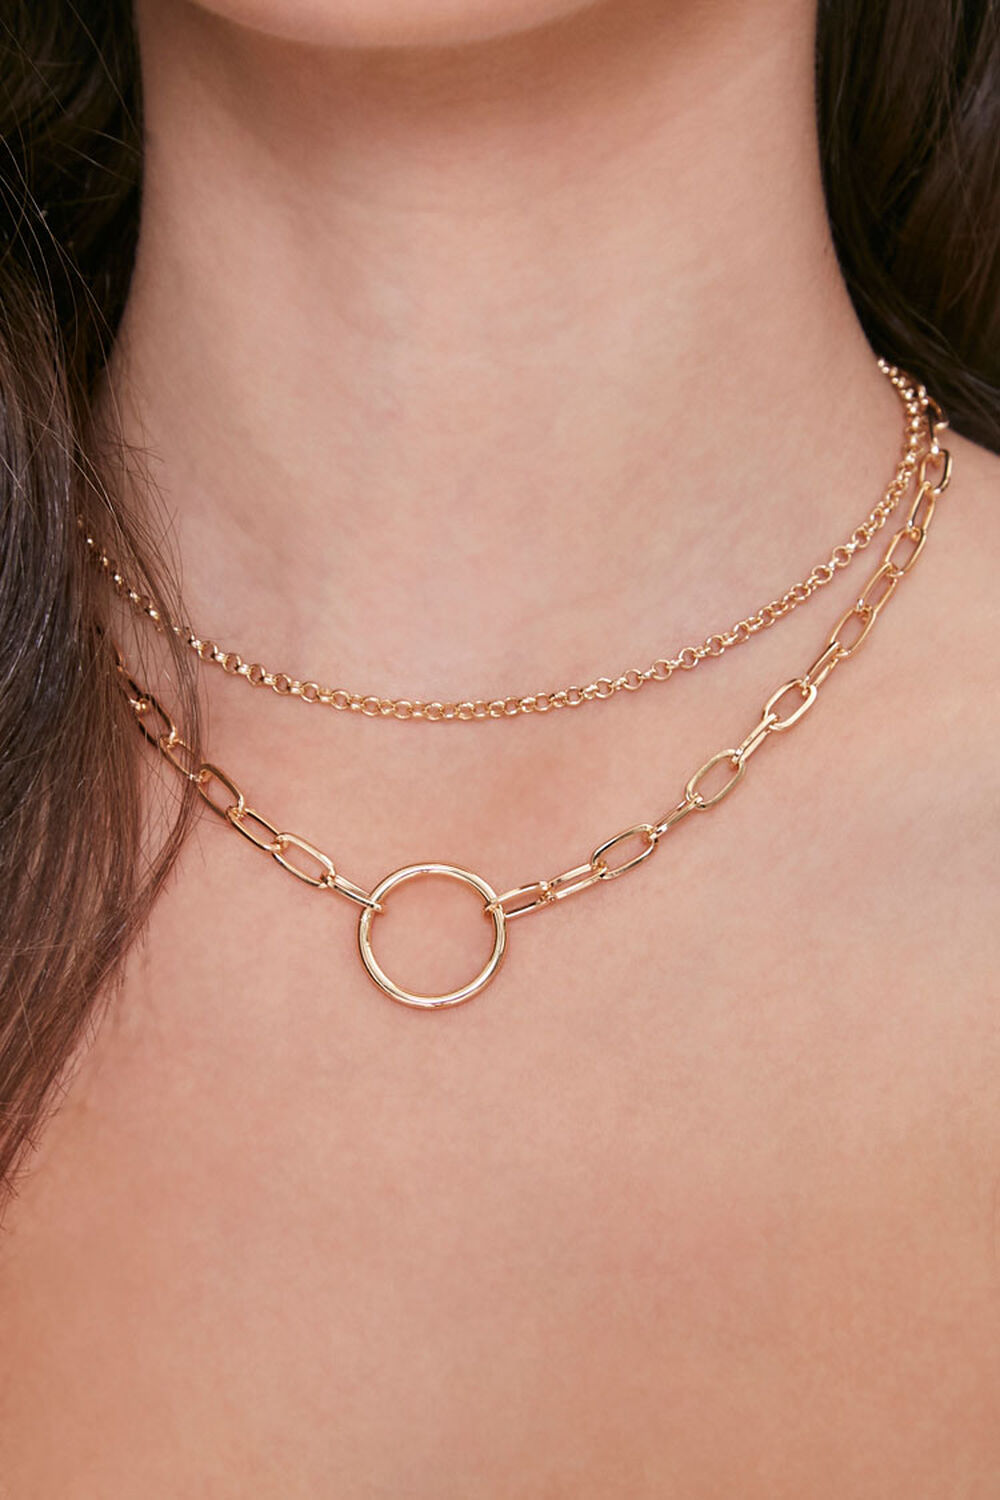 GOLD Circle Pendant Layered Necklace, image 1